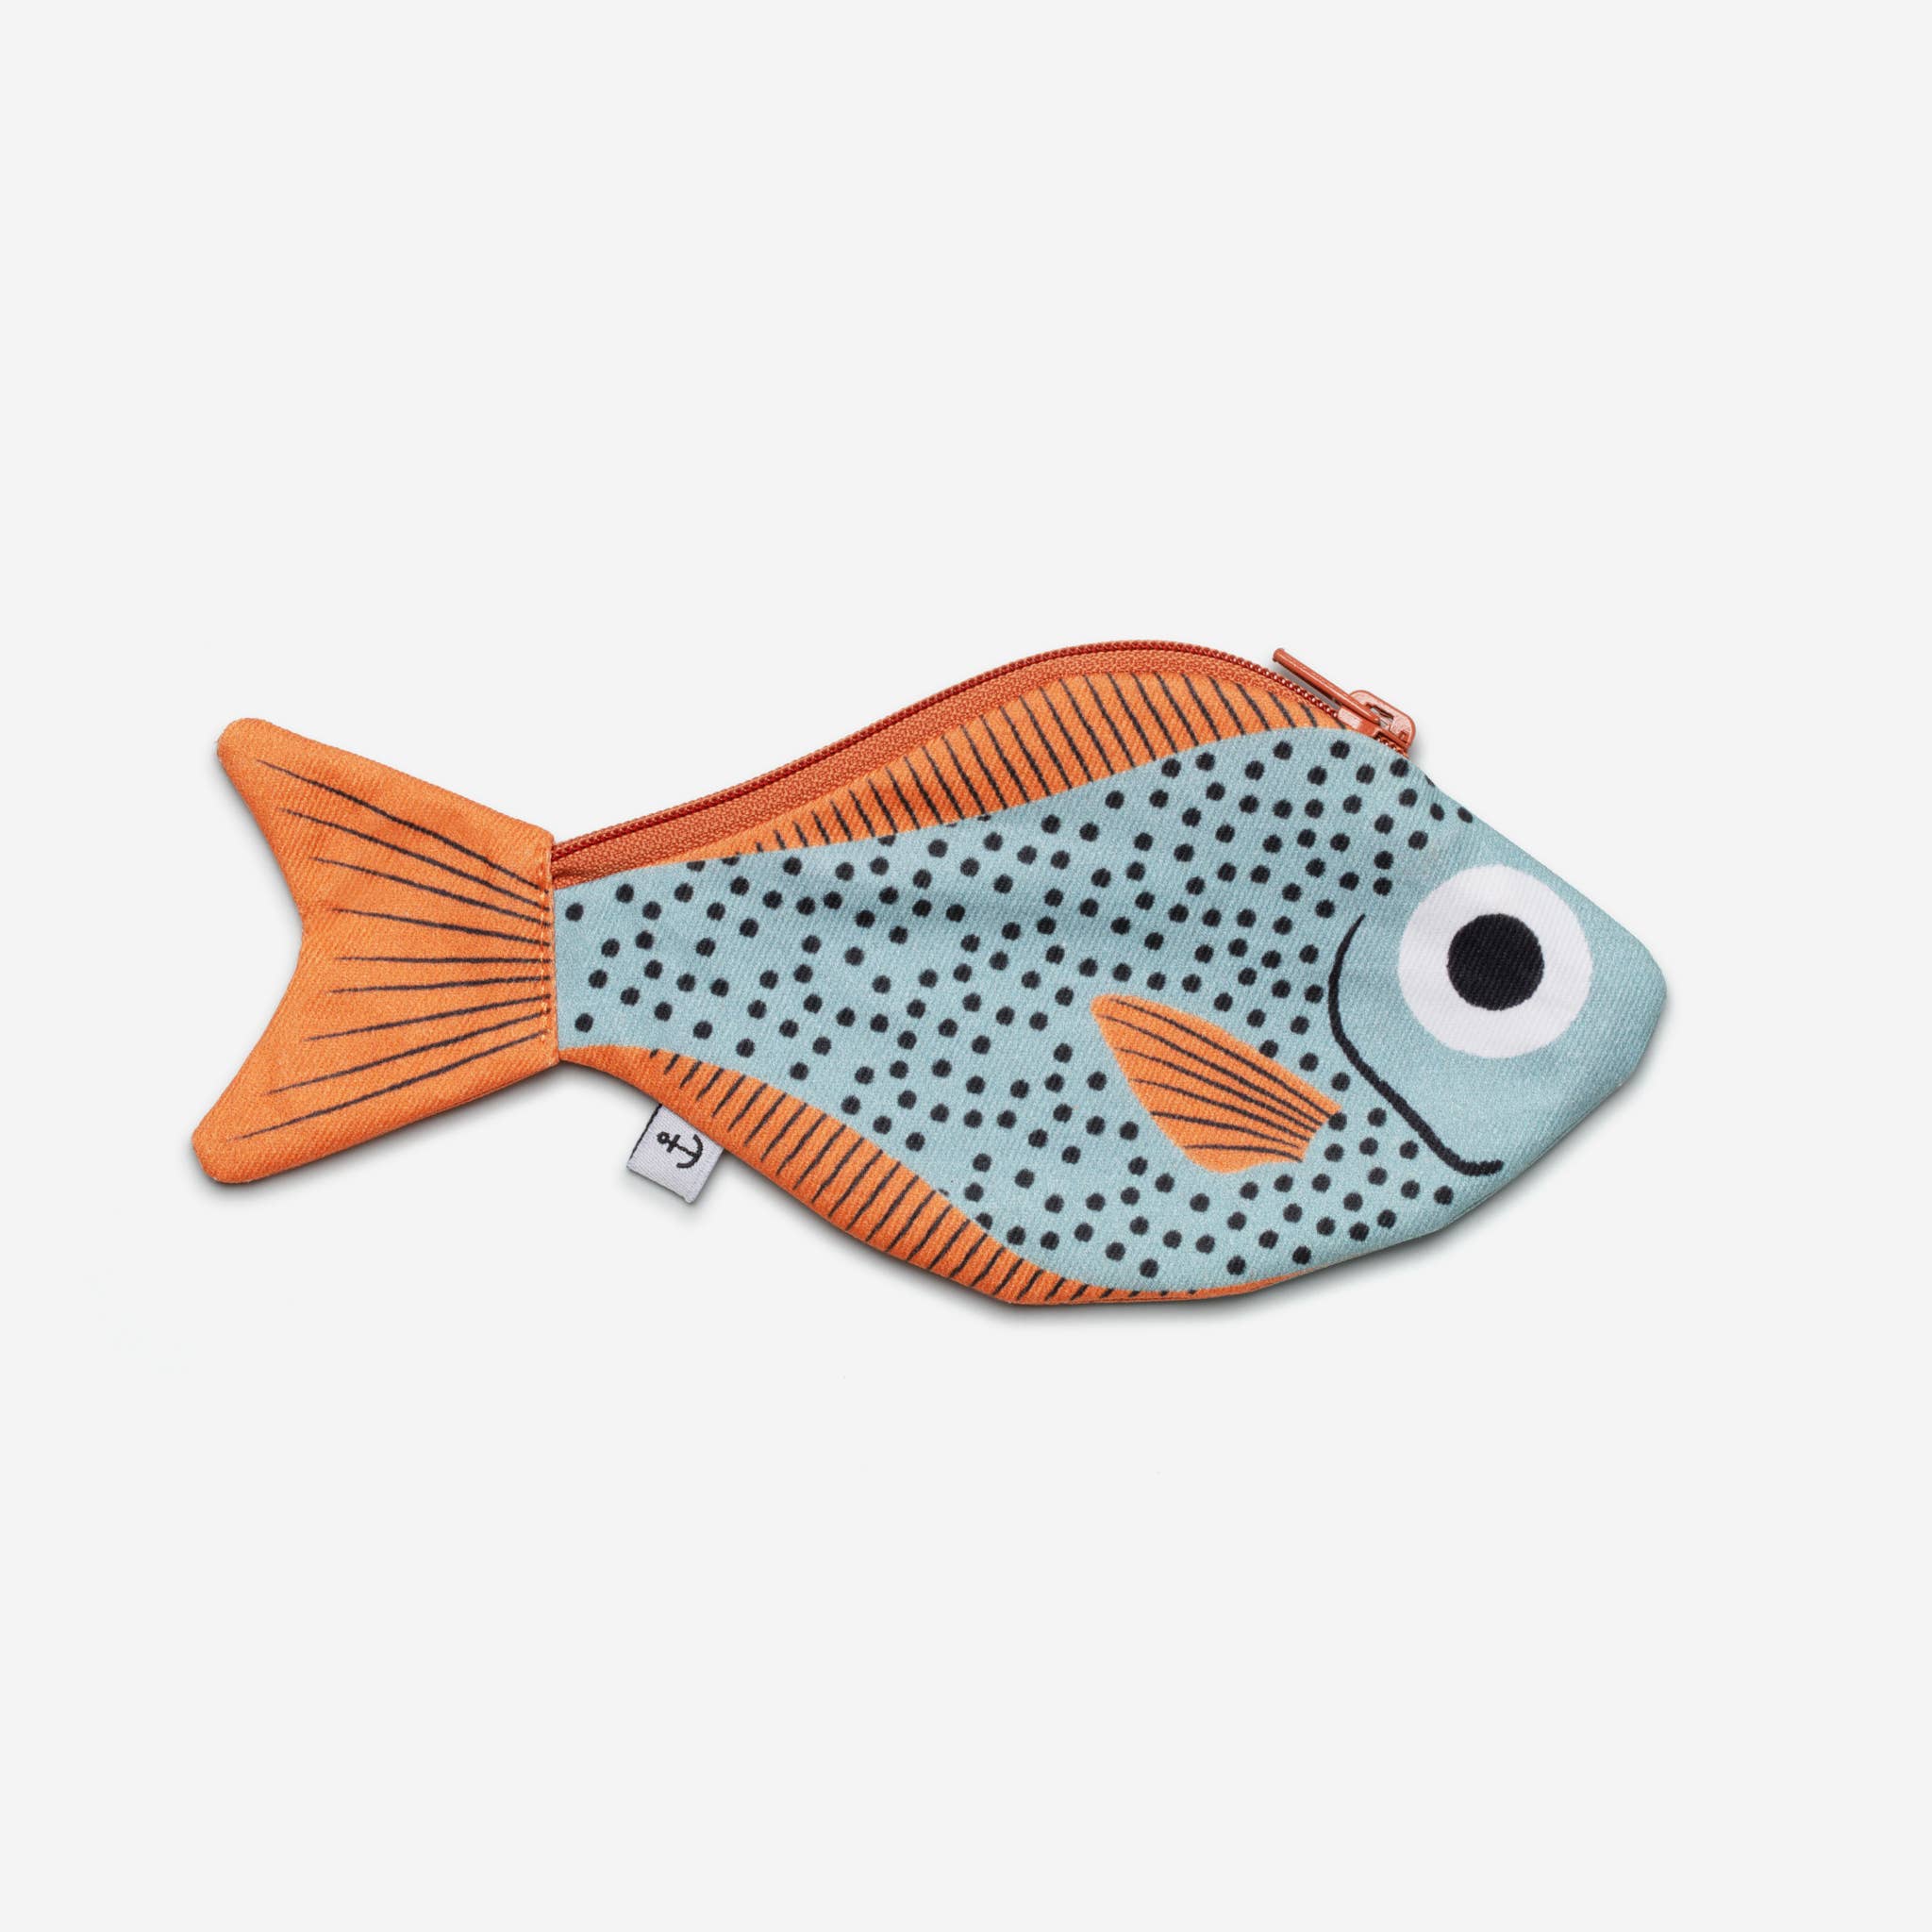 Sweeper fish purse or keychain (aqua)